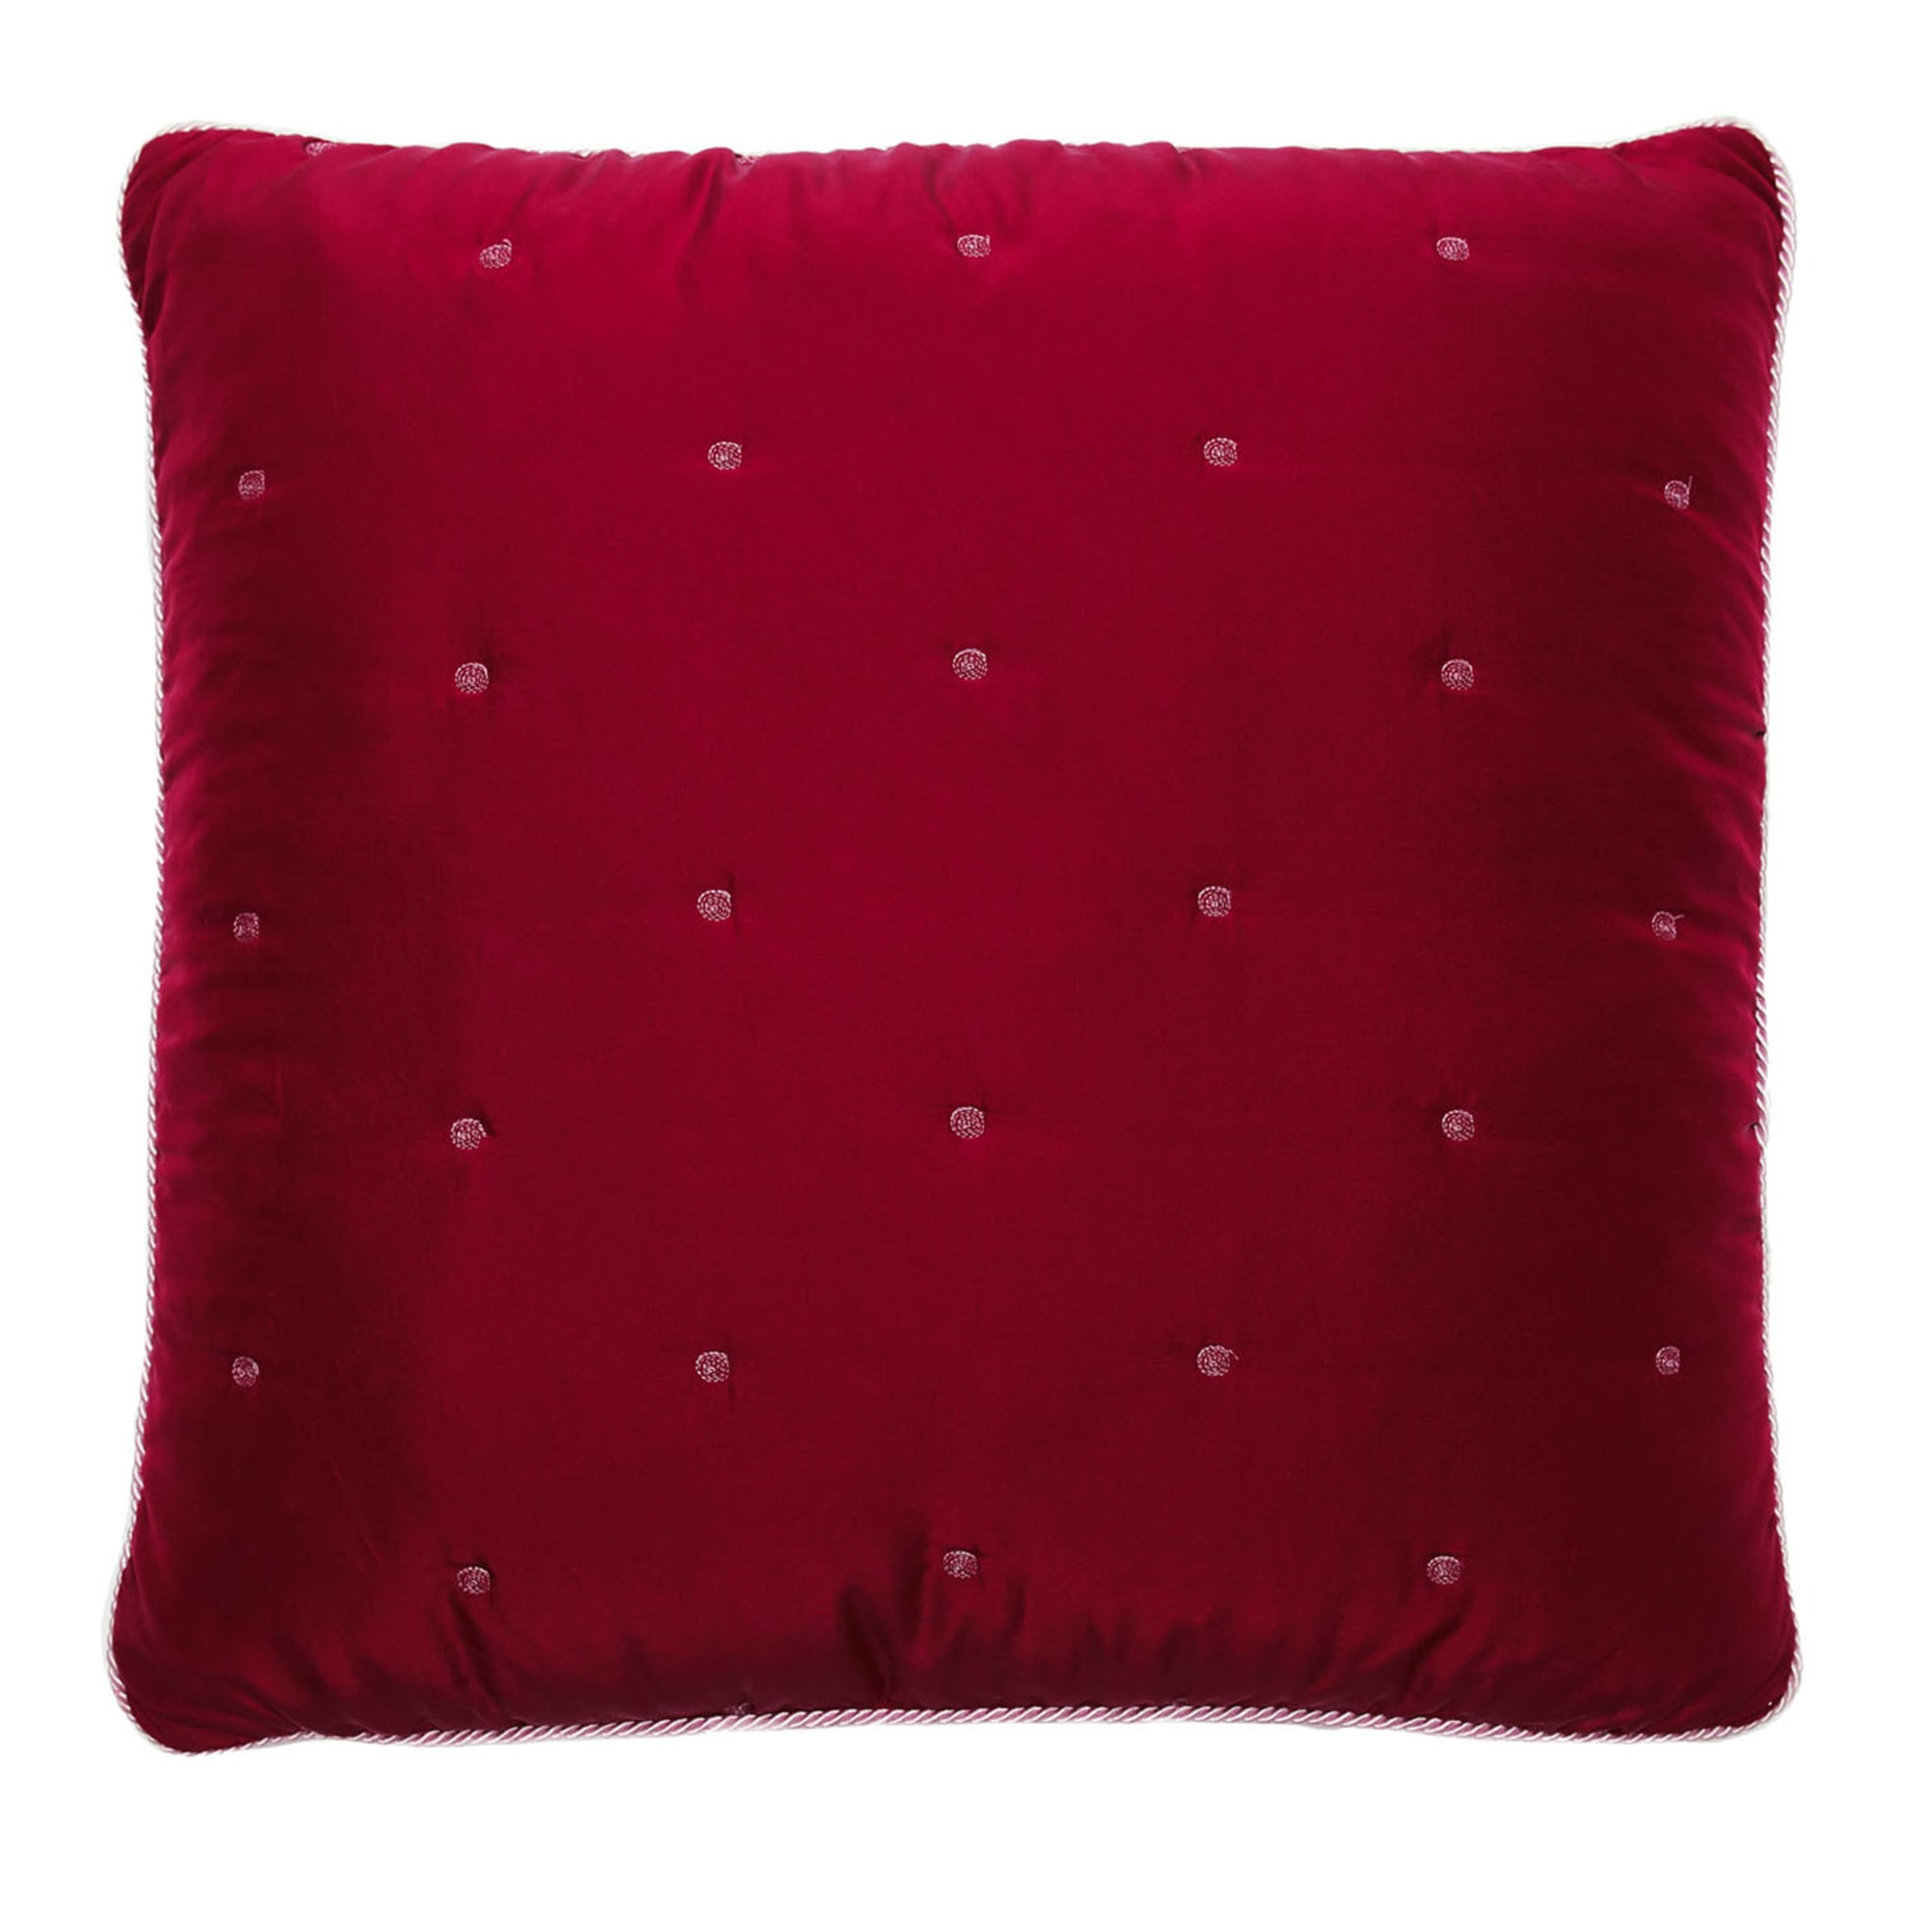 Pijama Party Red Decorative Cushion - Main view